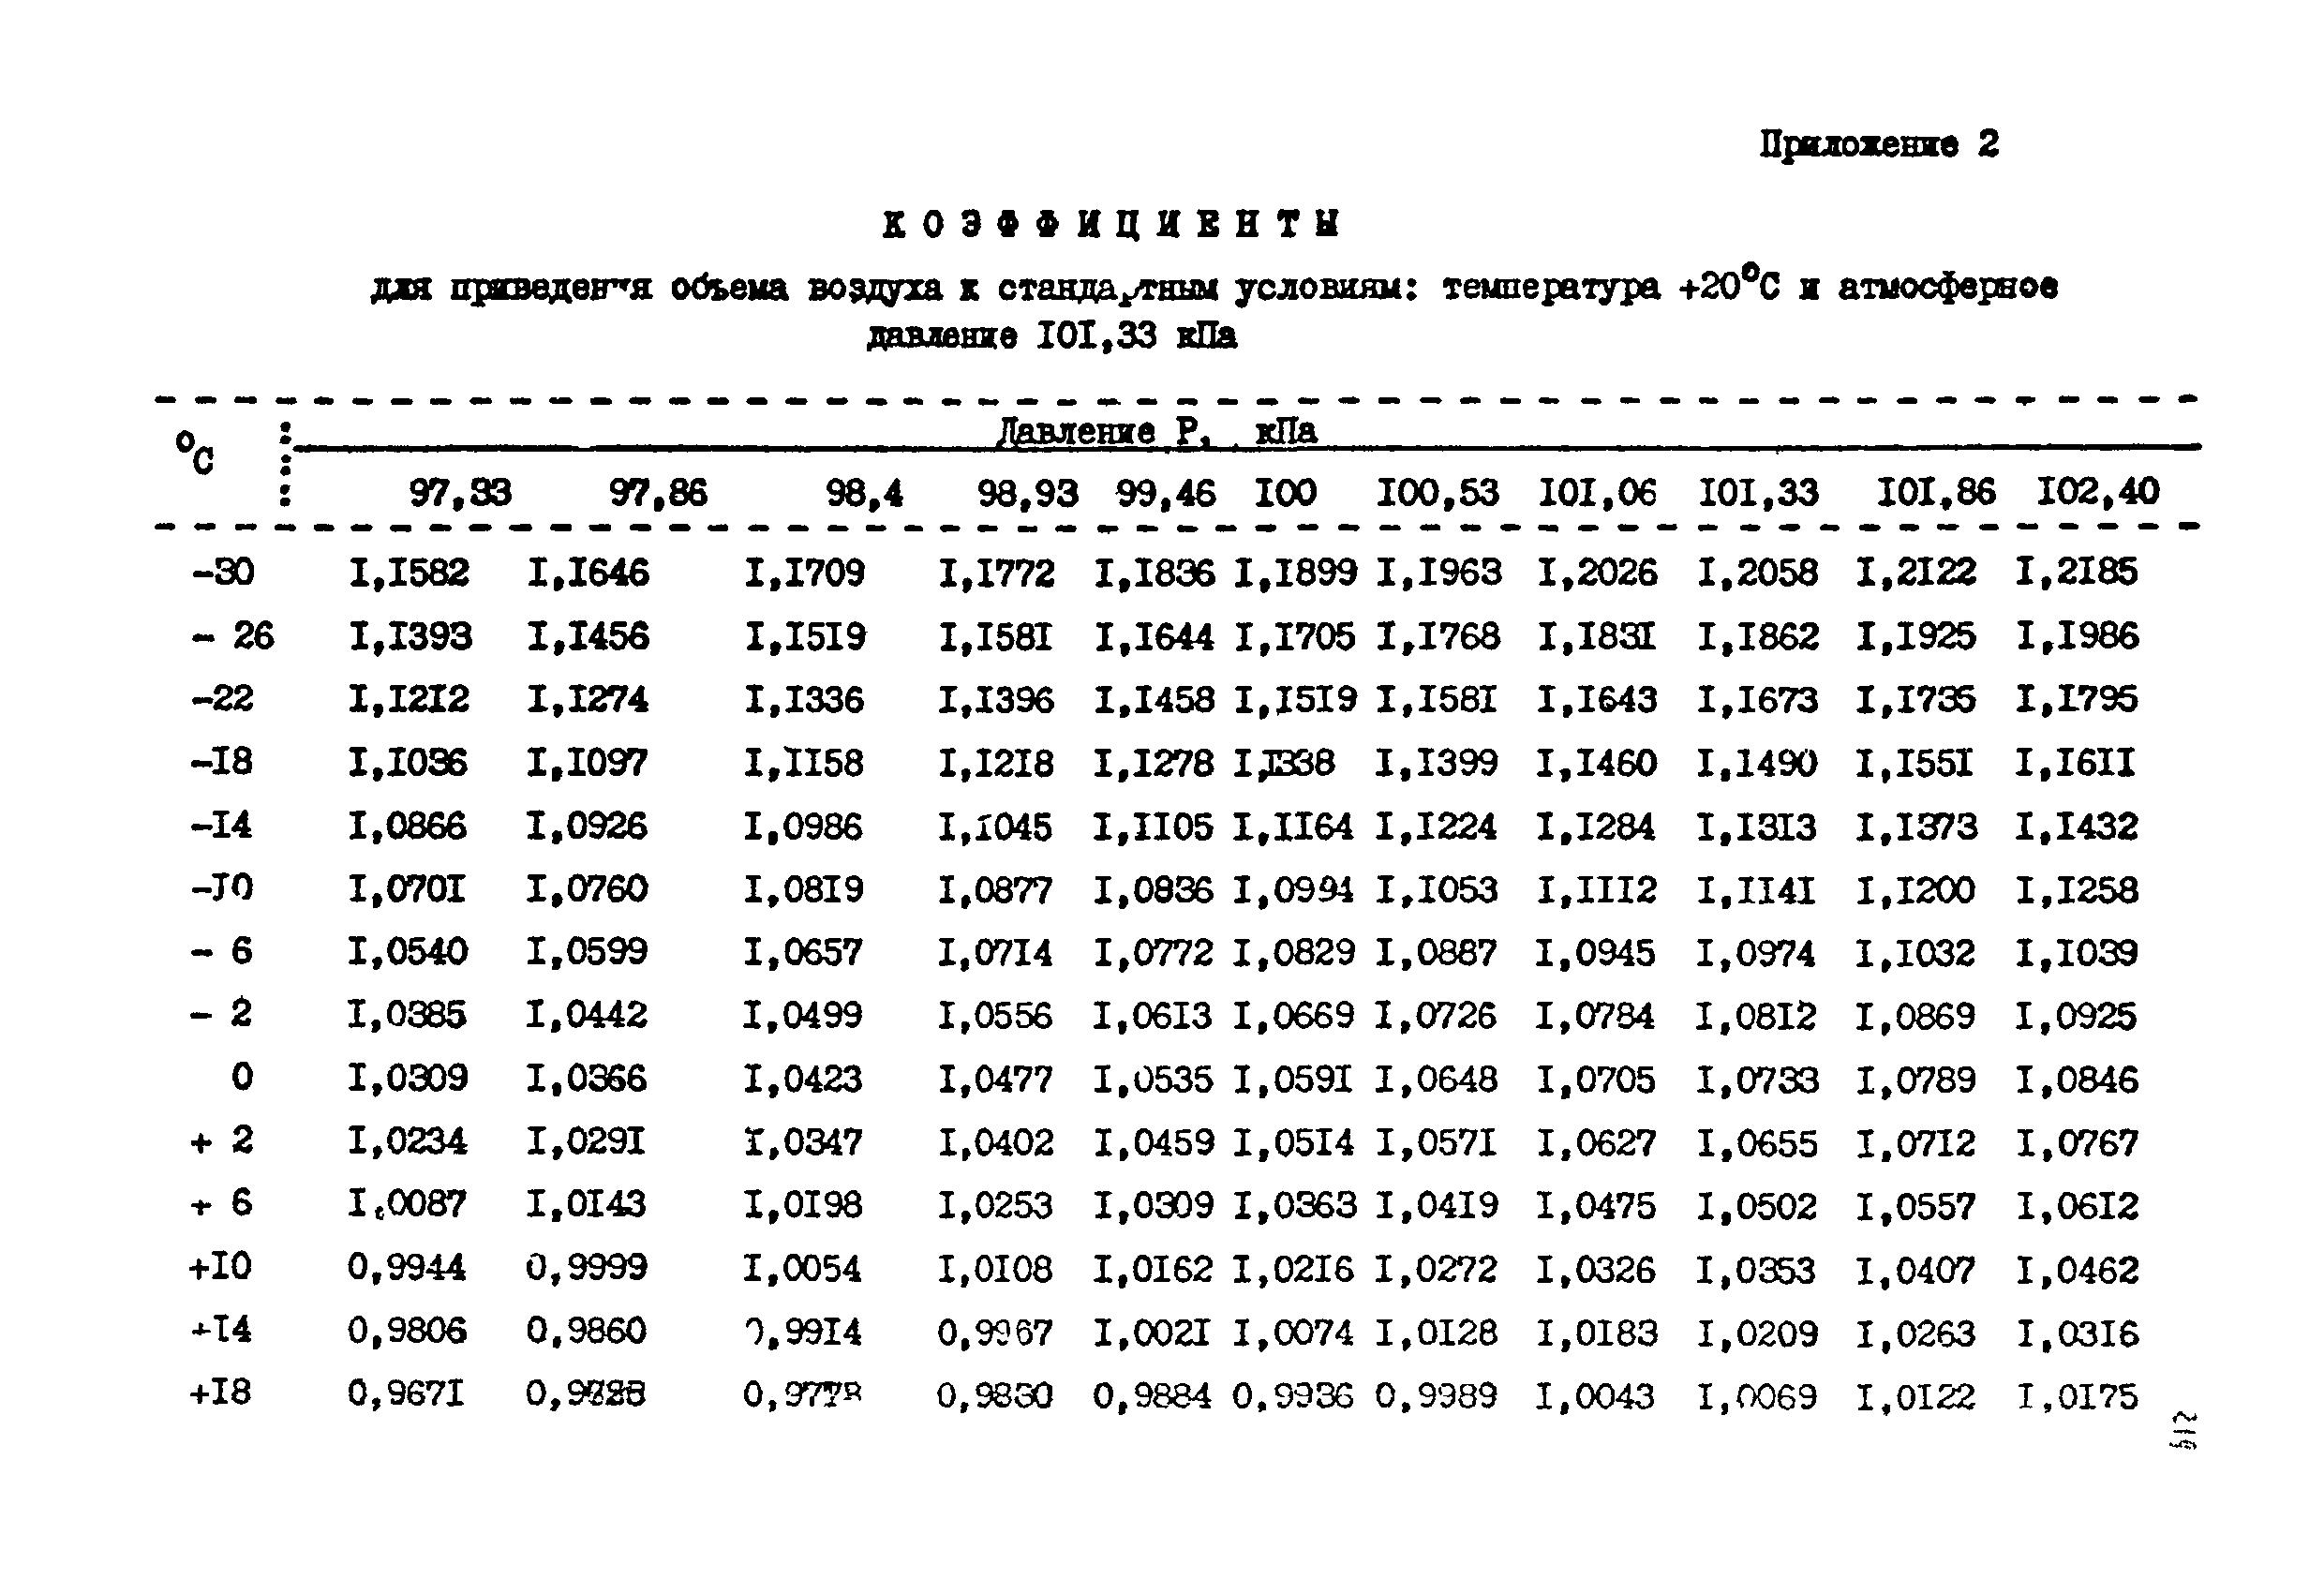 МУ 2699-83